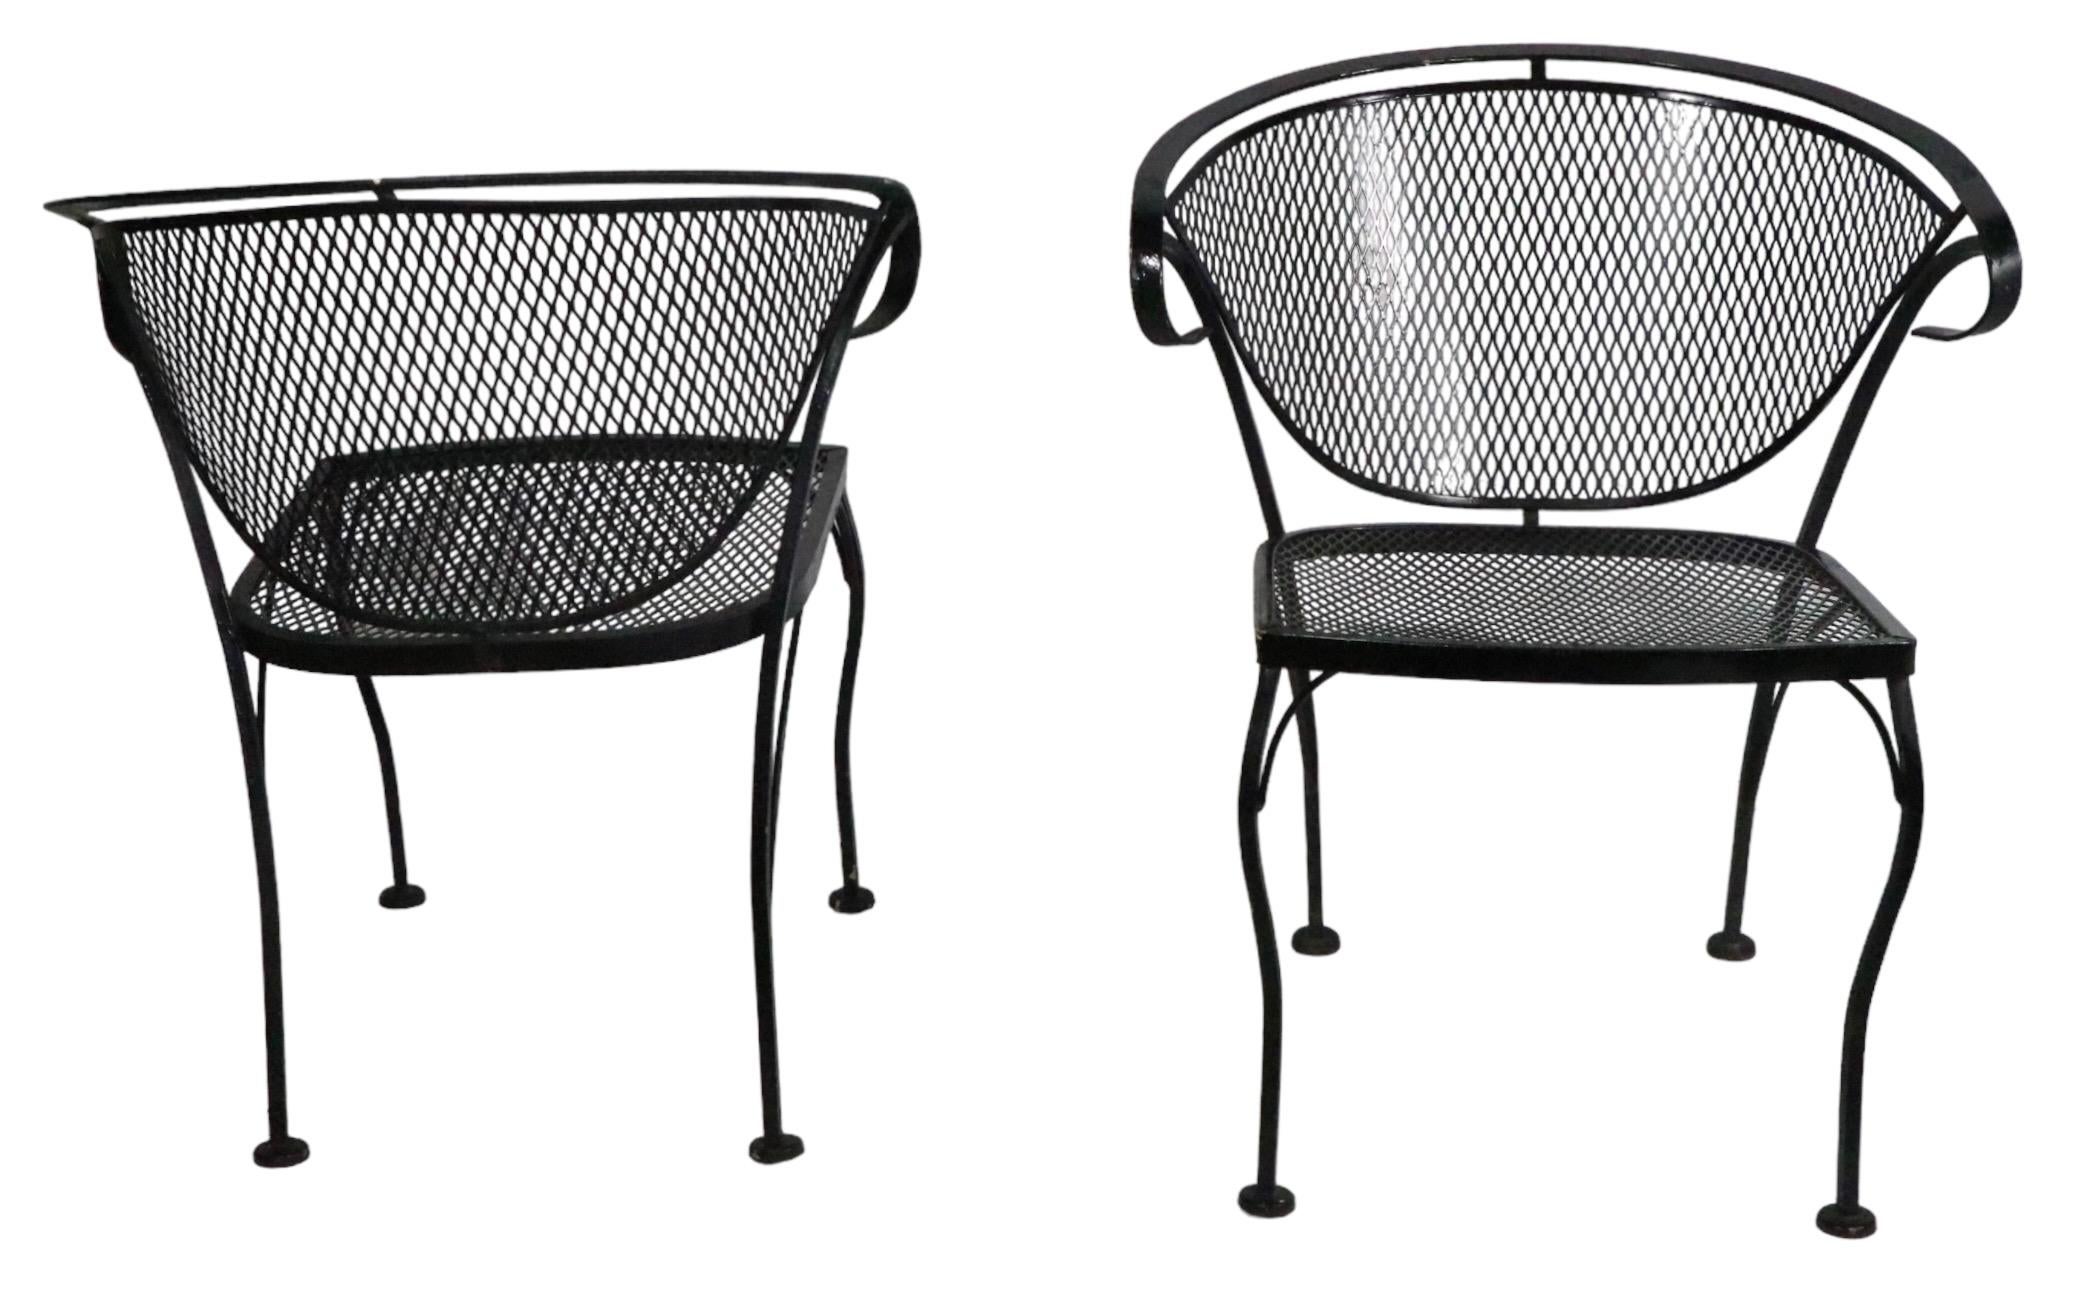 American Pr. Vintage Garden Patio Poolside Dining Chairs att. to Woodard c 1950/1970's For Sale